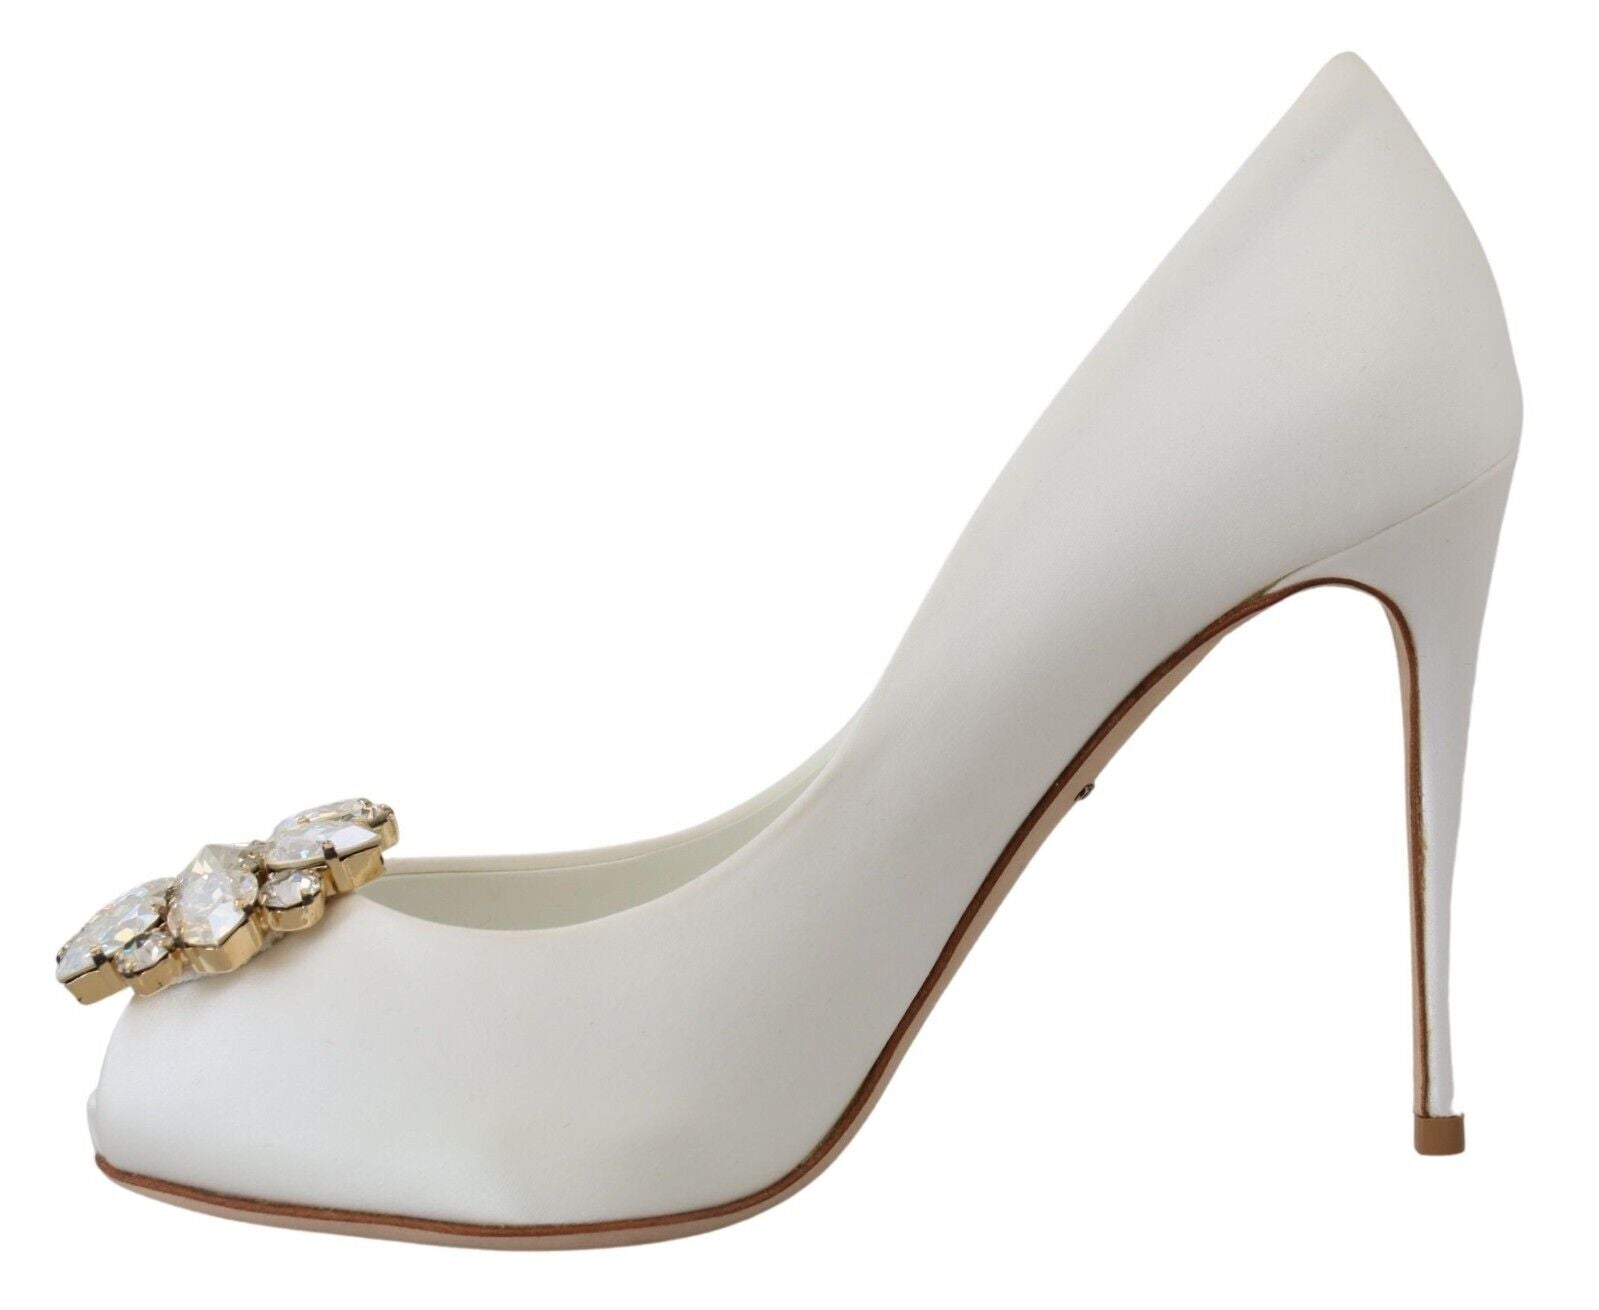 Crystal-Embellished White Peep Toe Heels